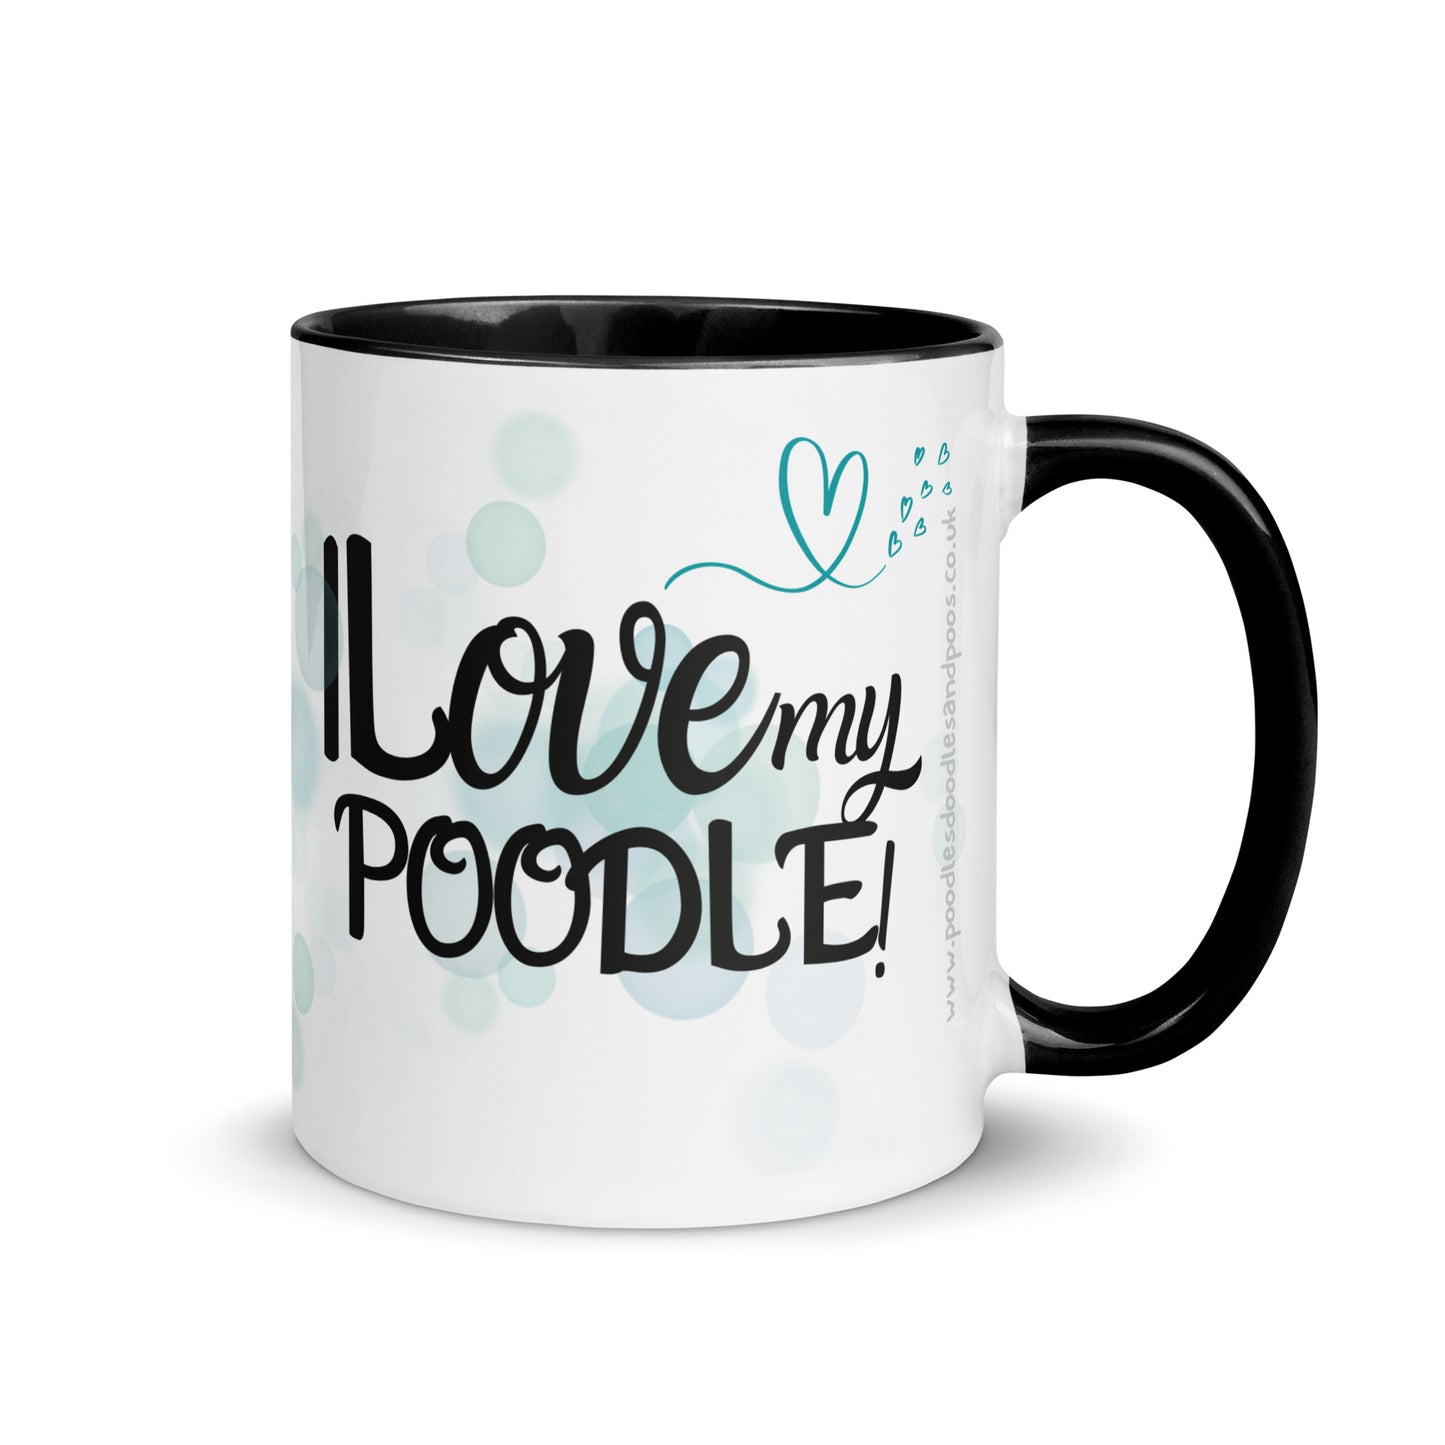 "I Love My..." mug with black inside - light/white Poodle